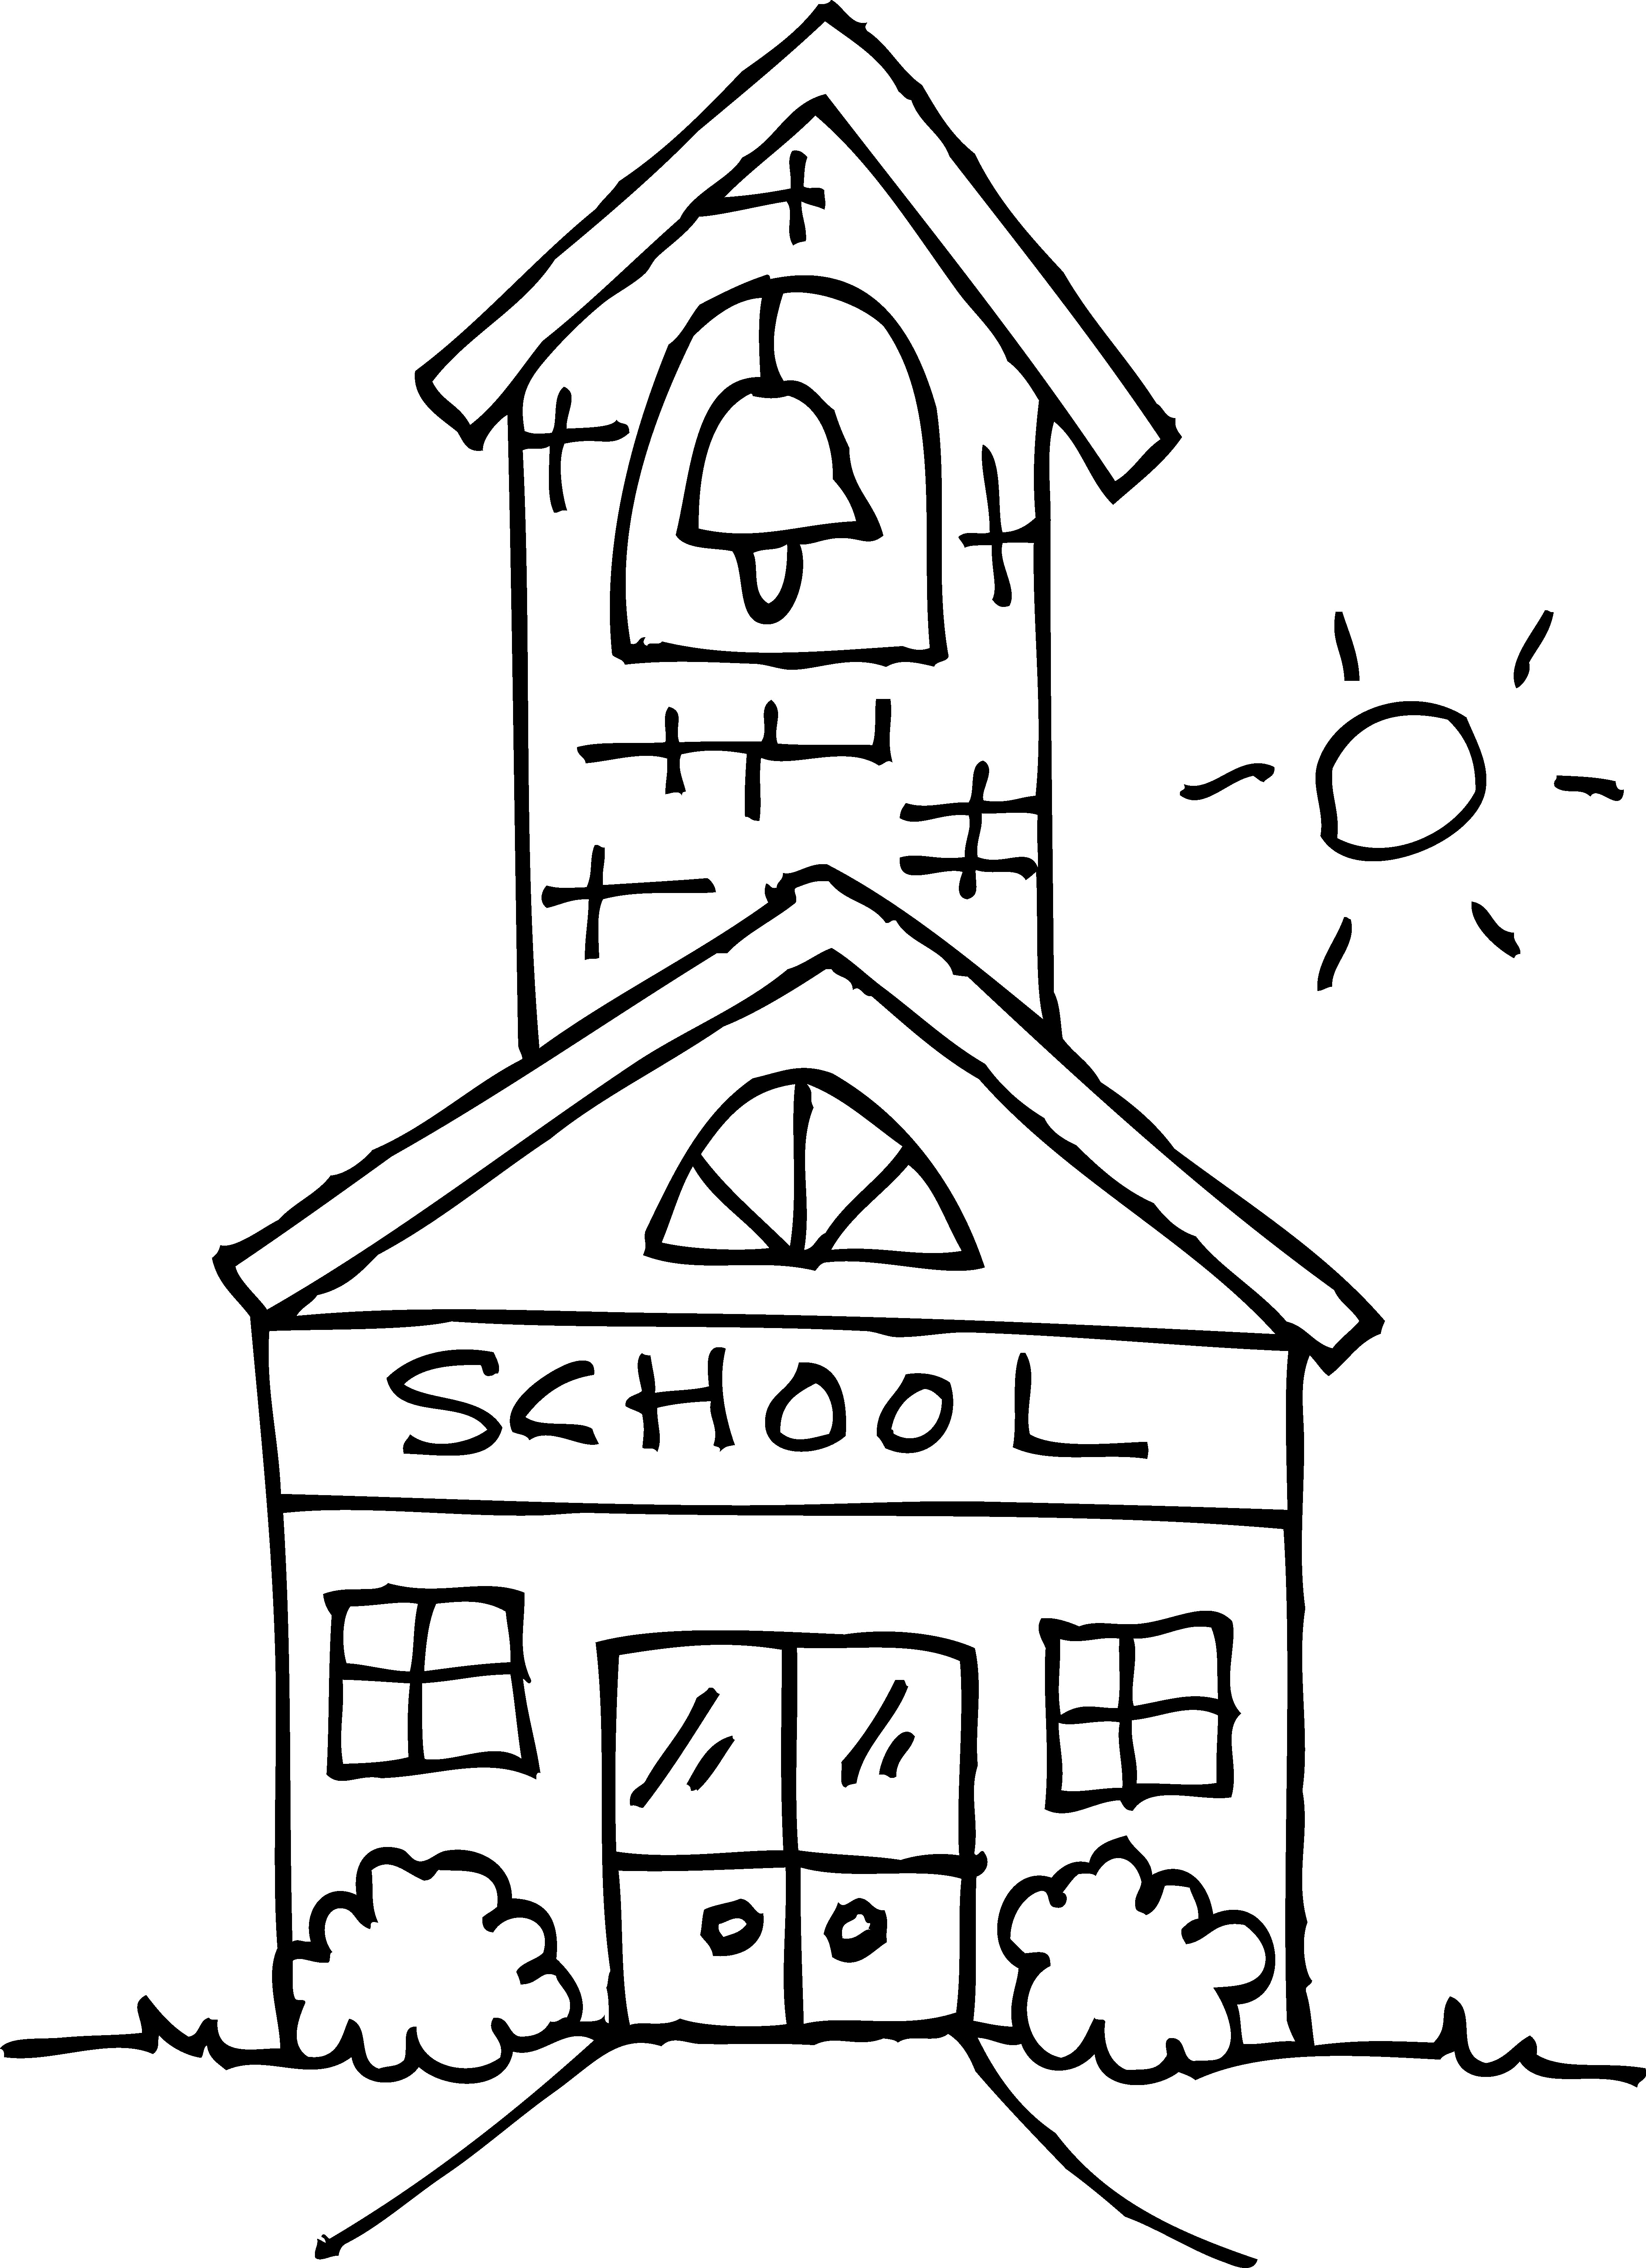 Schoolhouse buliding